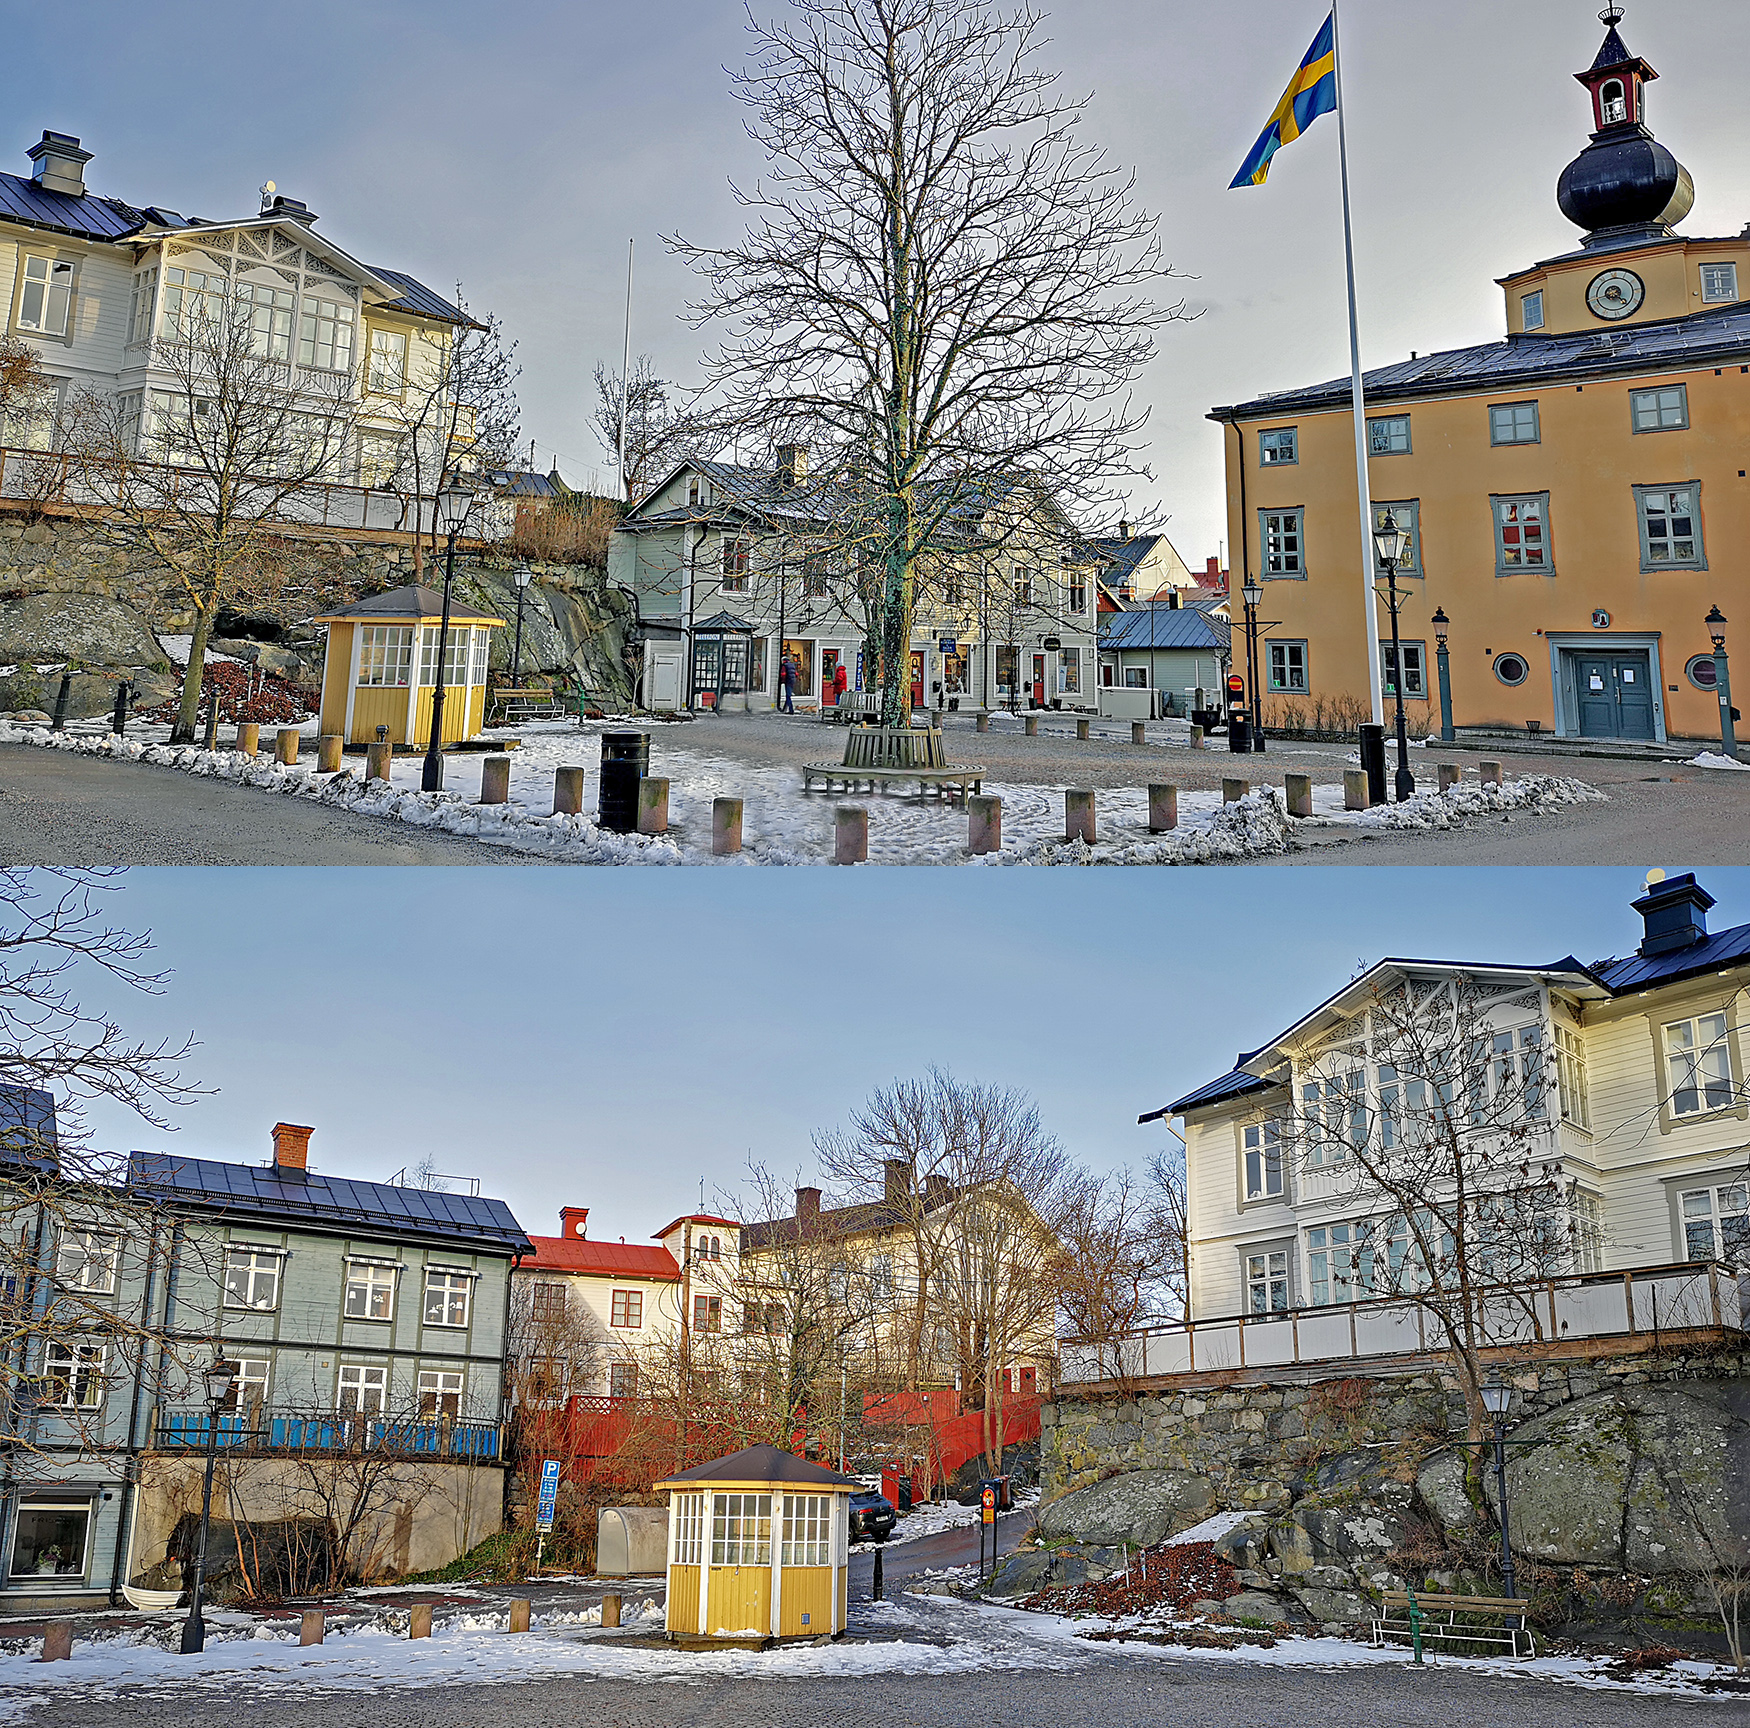 Är Rådhustorget i Vaxholm Sveriges vackraste torg?